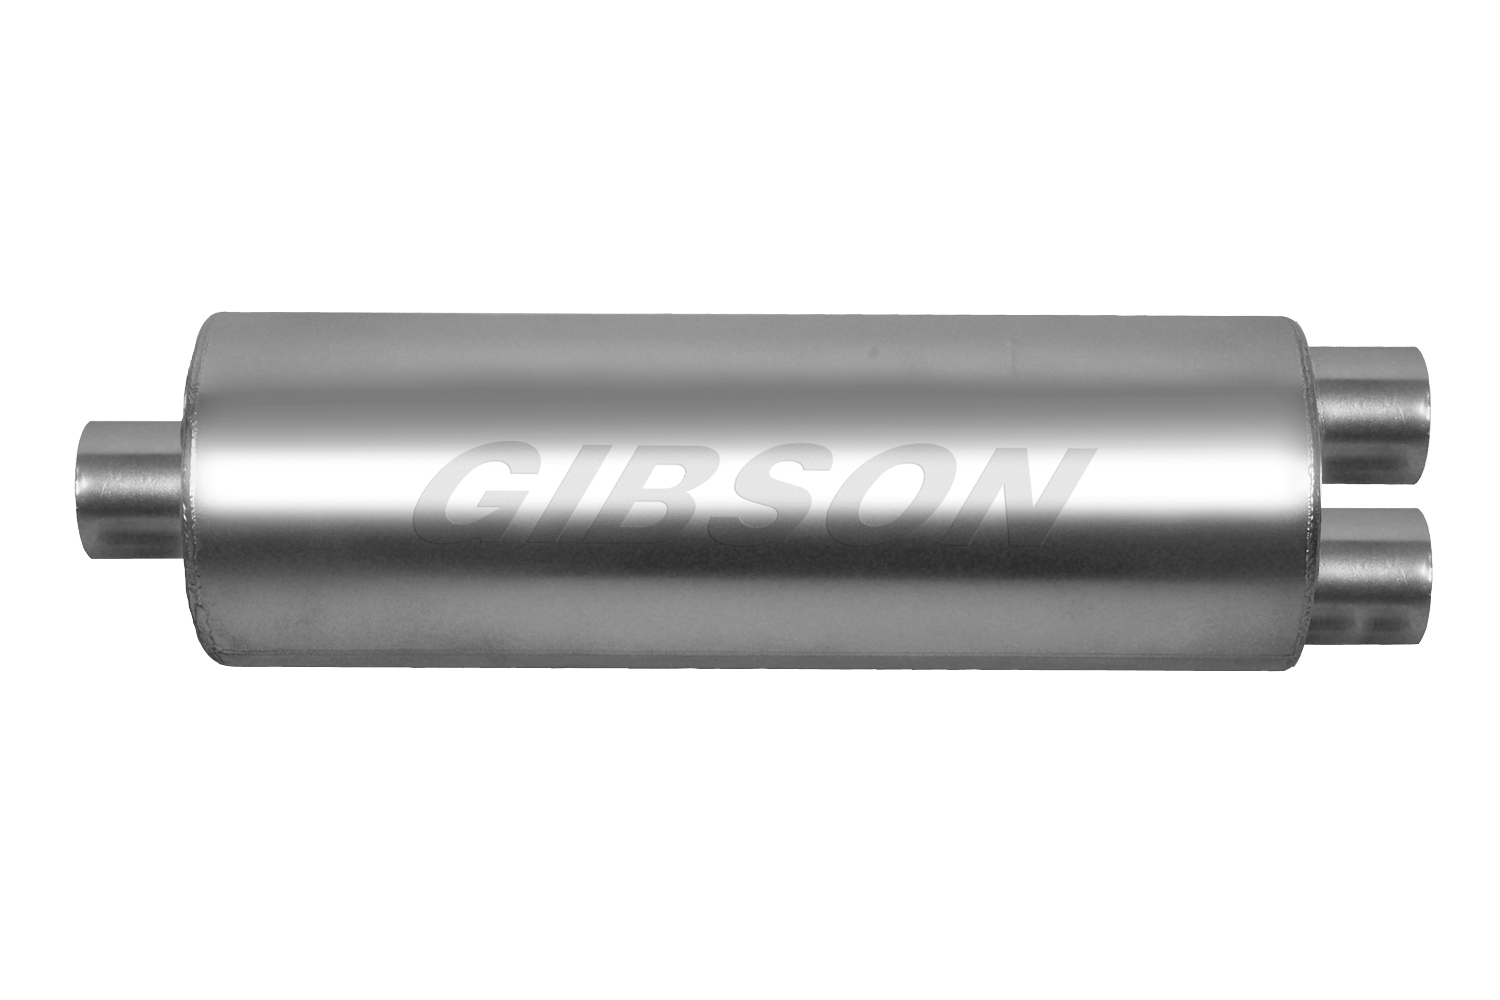 Gibson SFT Superflow Center/Dual Round Muffler Stainless - 758216S